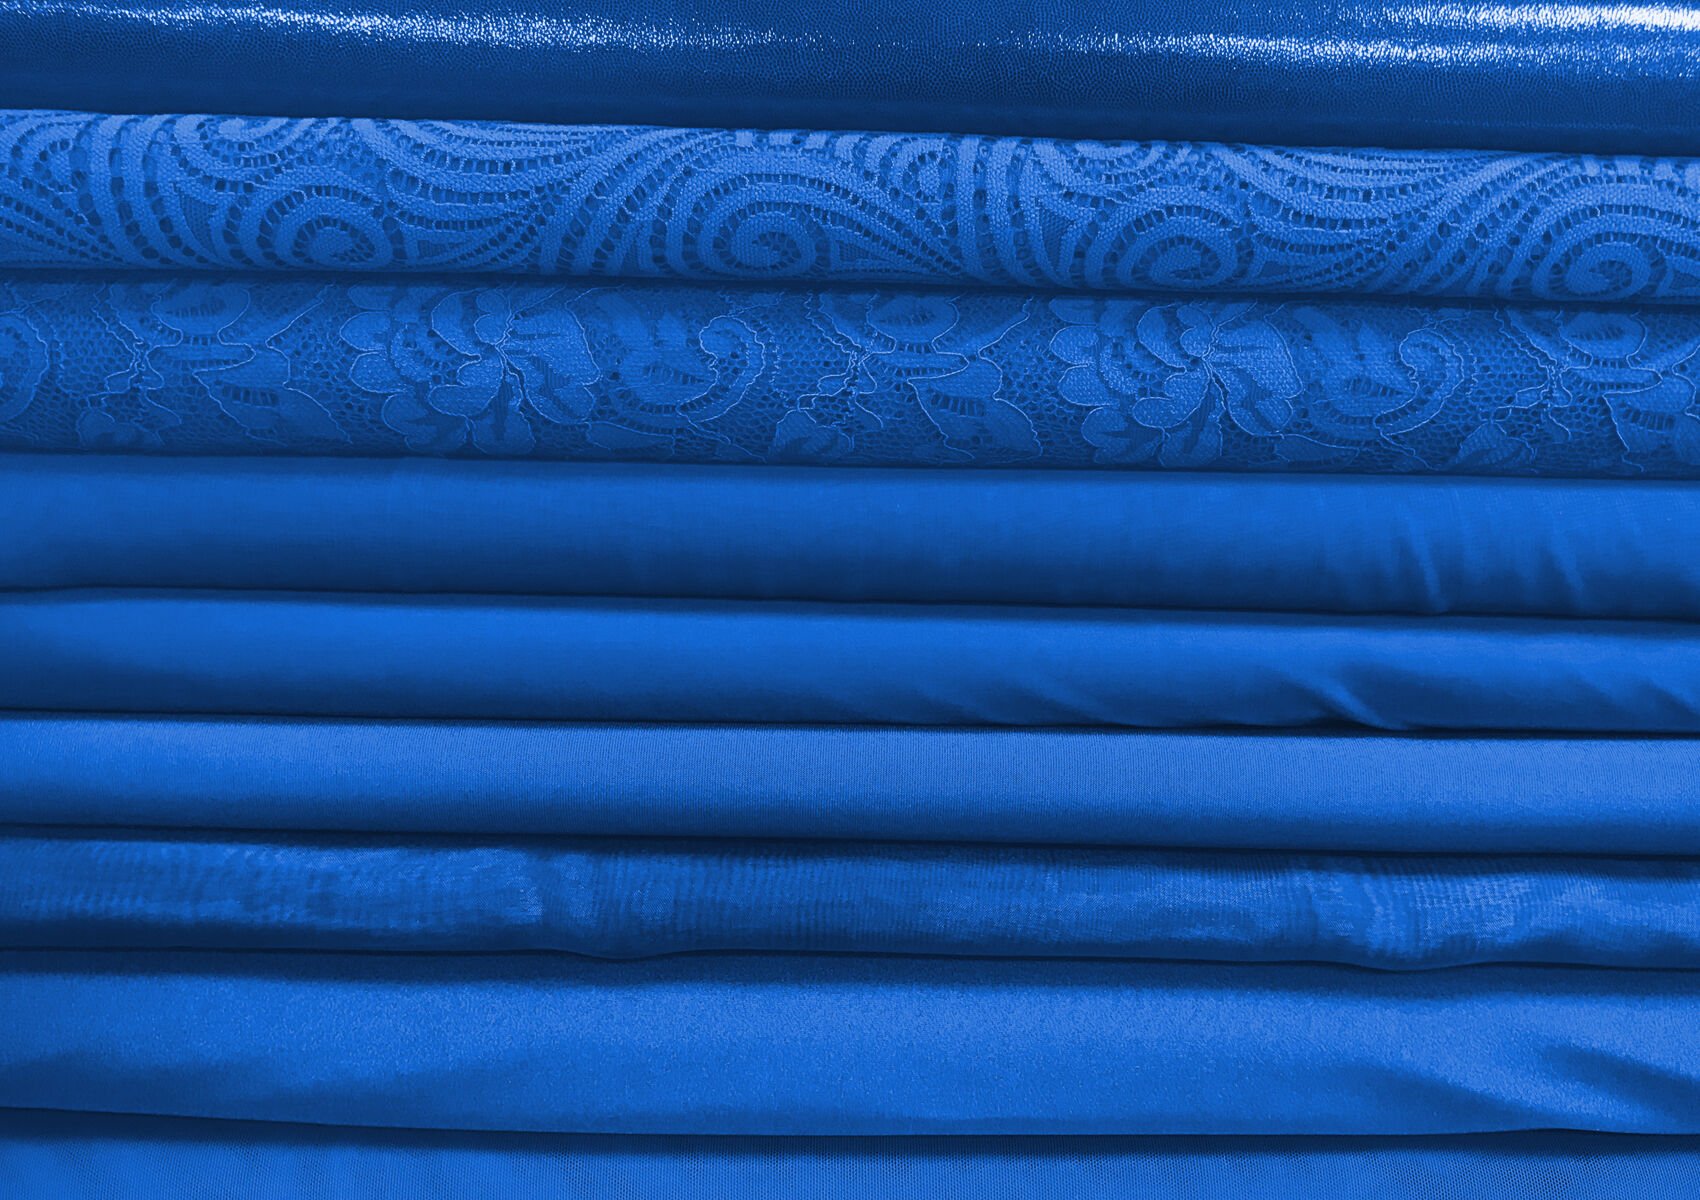 Browse electric blue colour fabric